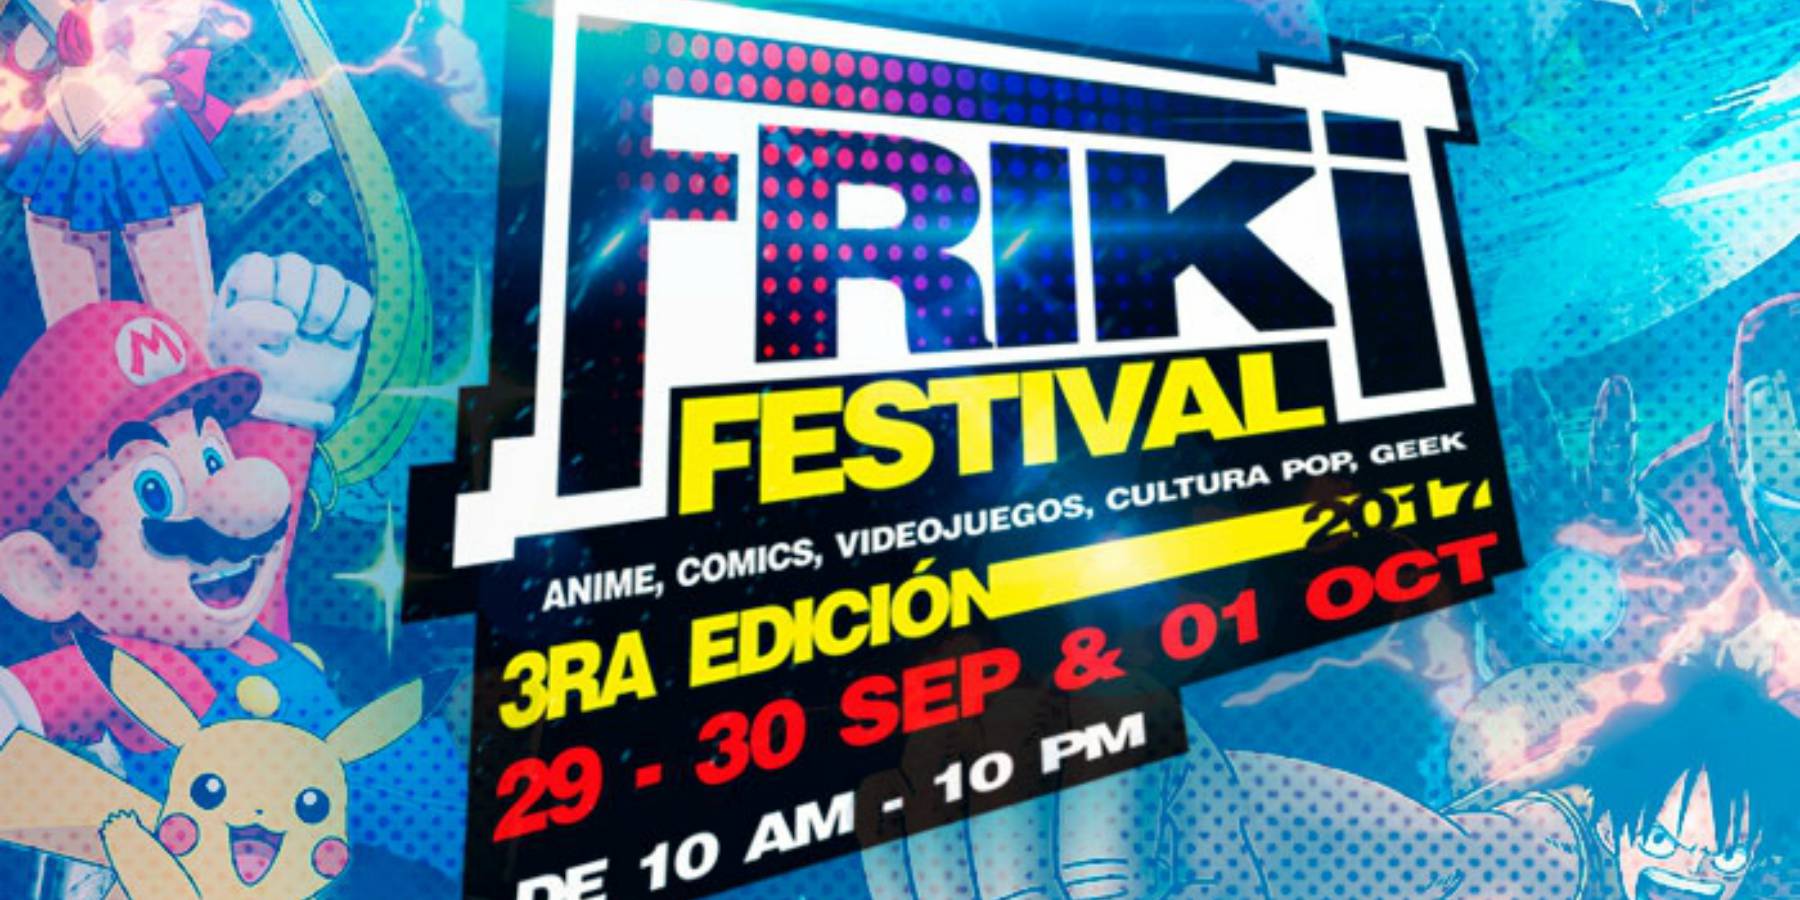 Friki Festival Mall del Sur | Tercera Edición